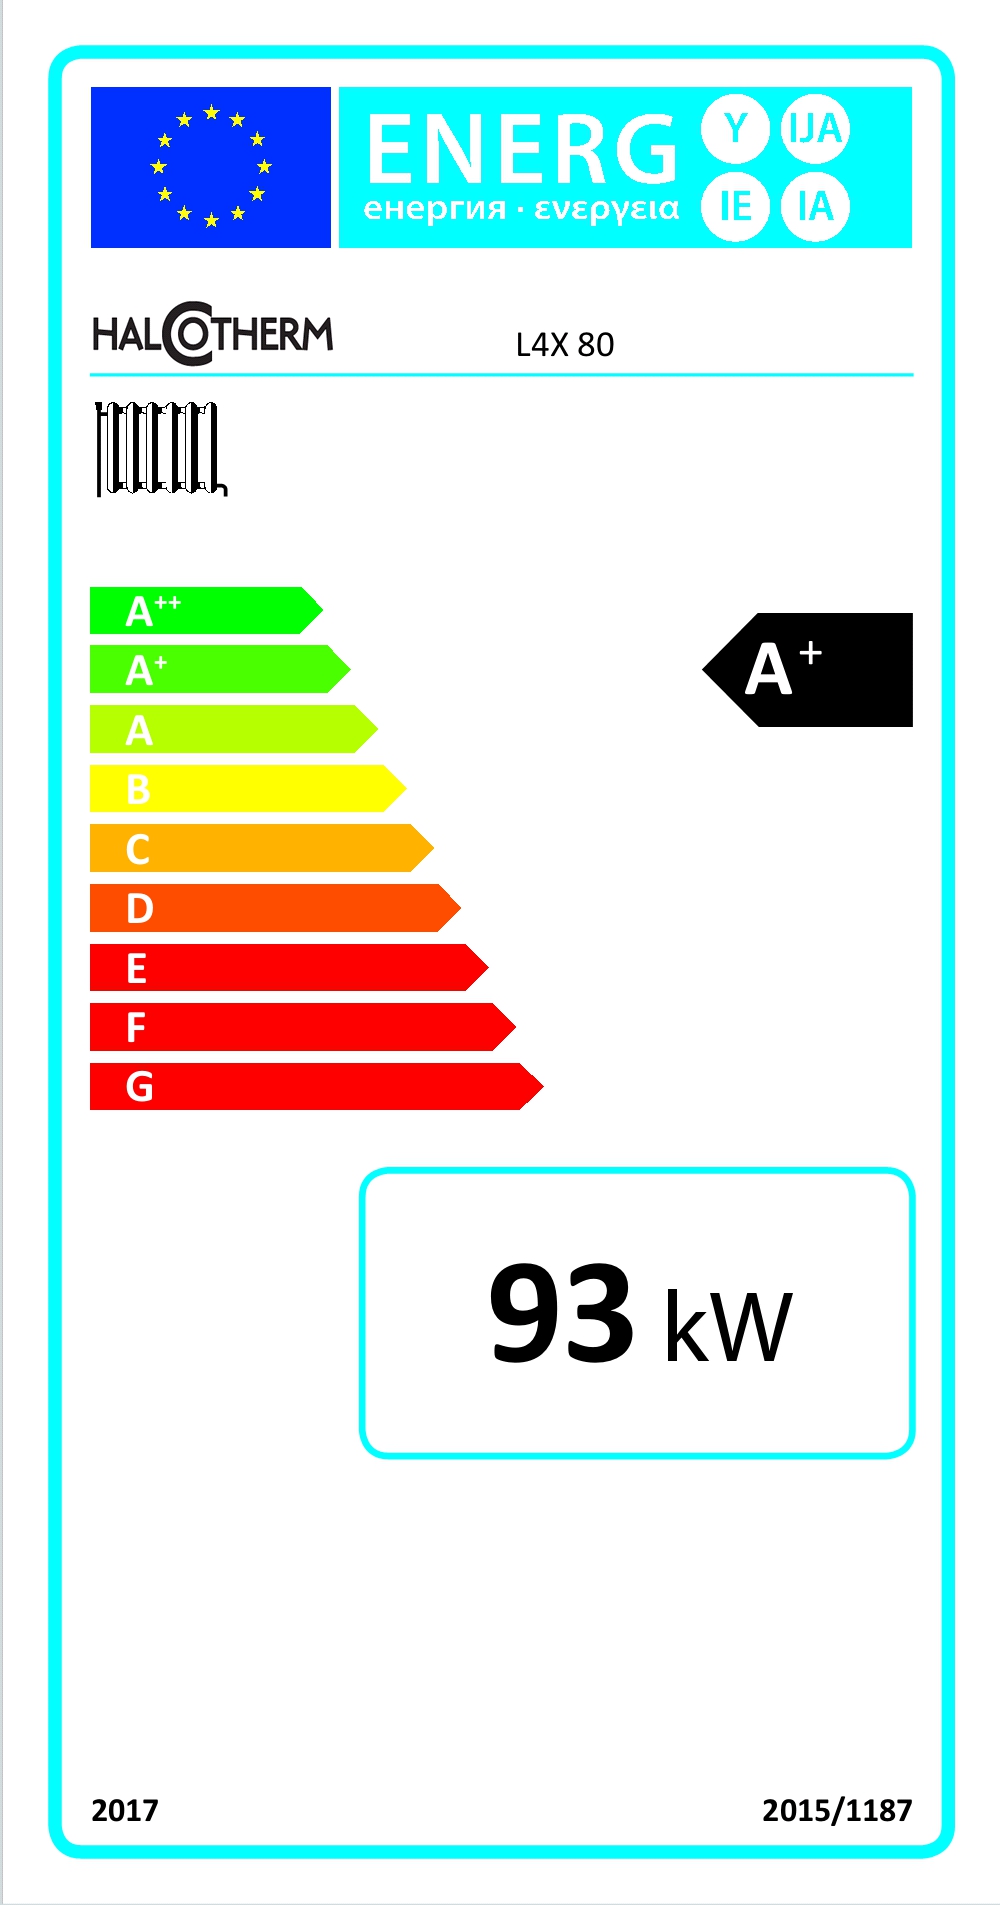 Energy Label L4X80